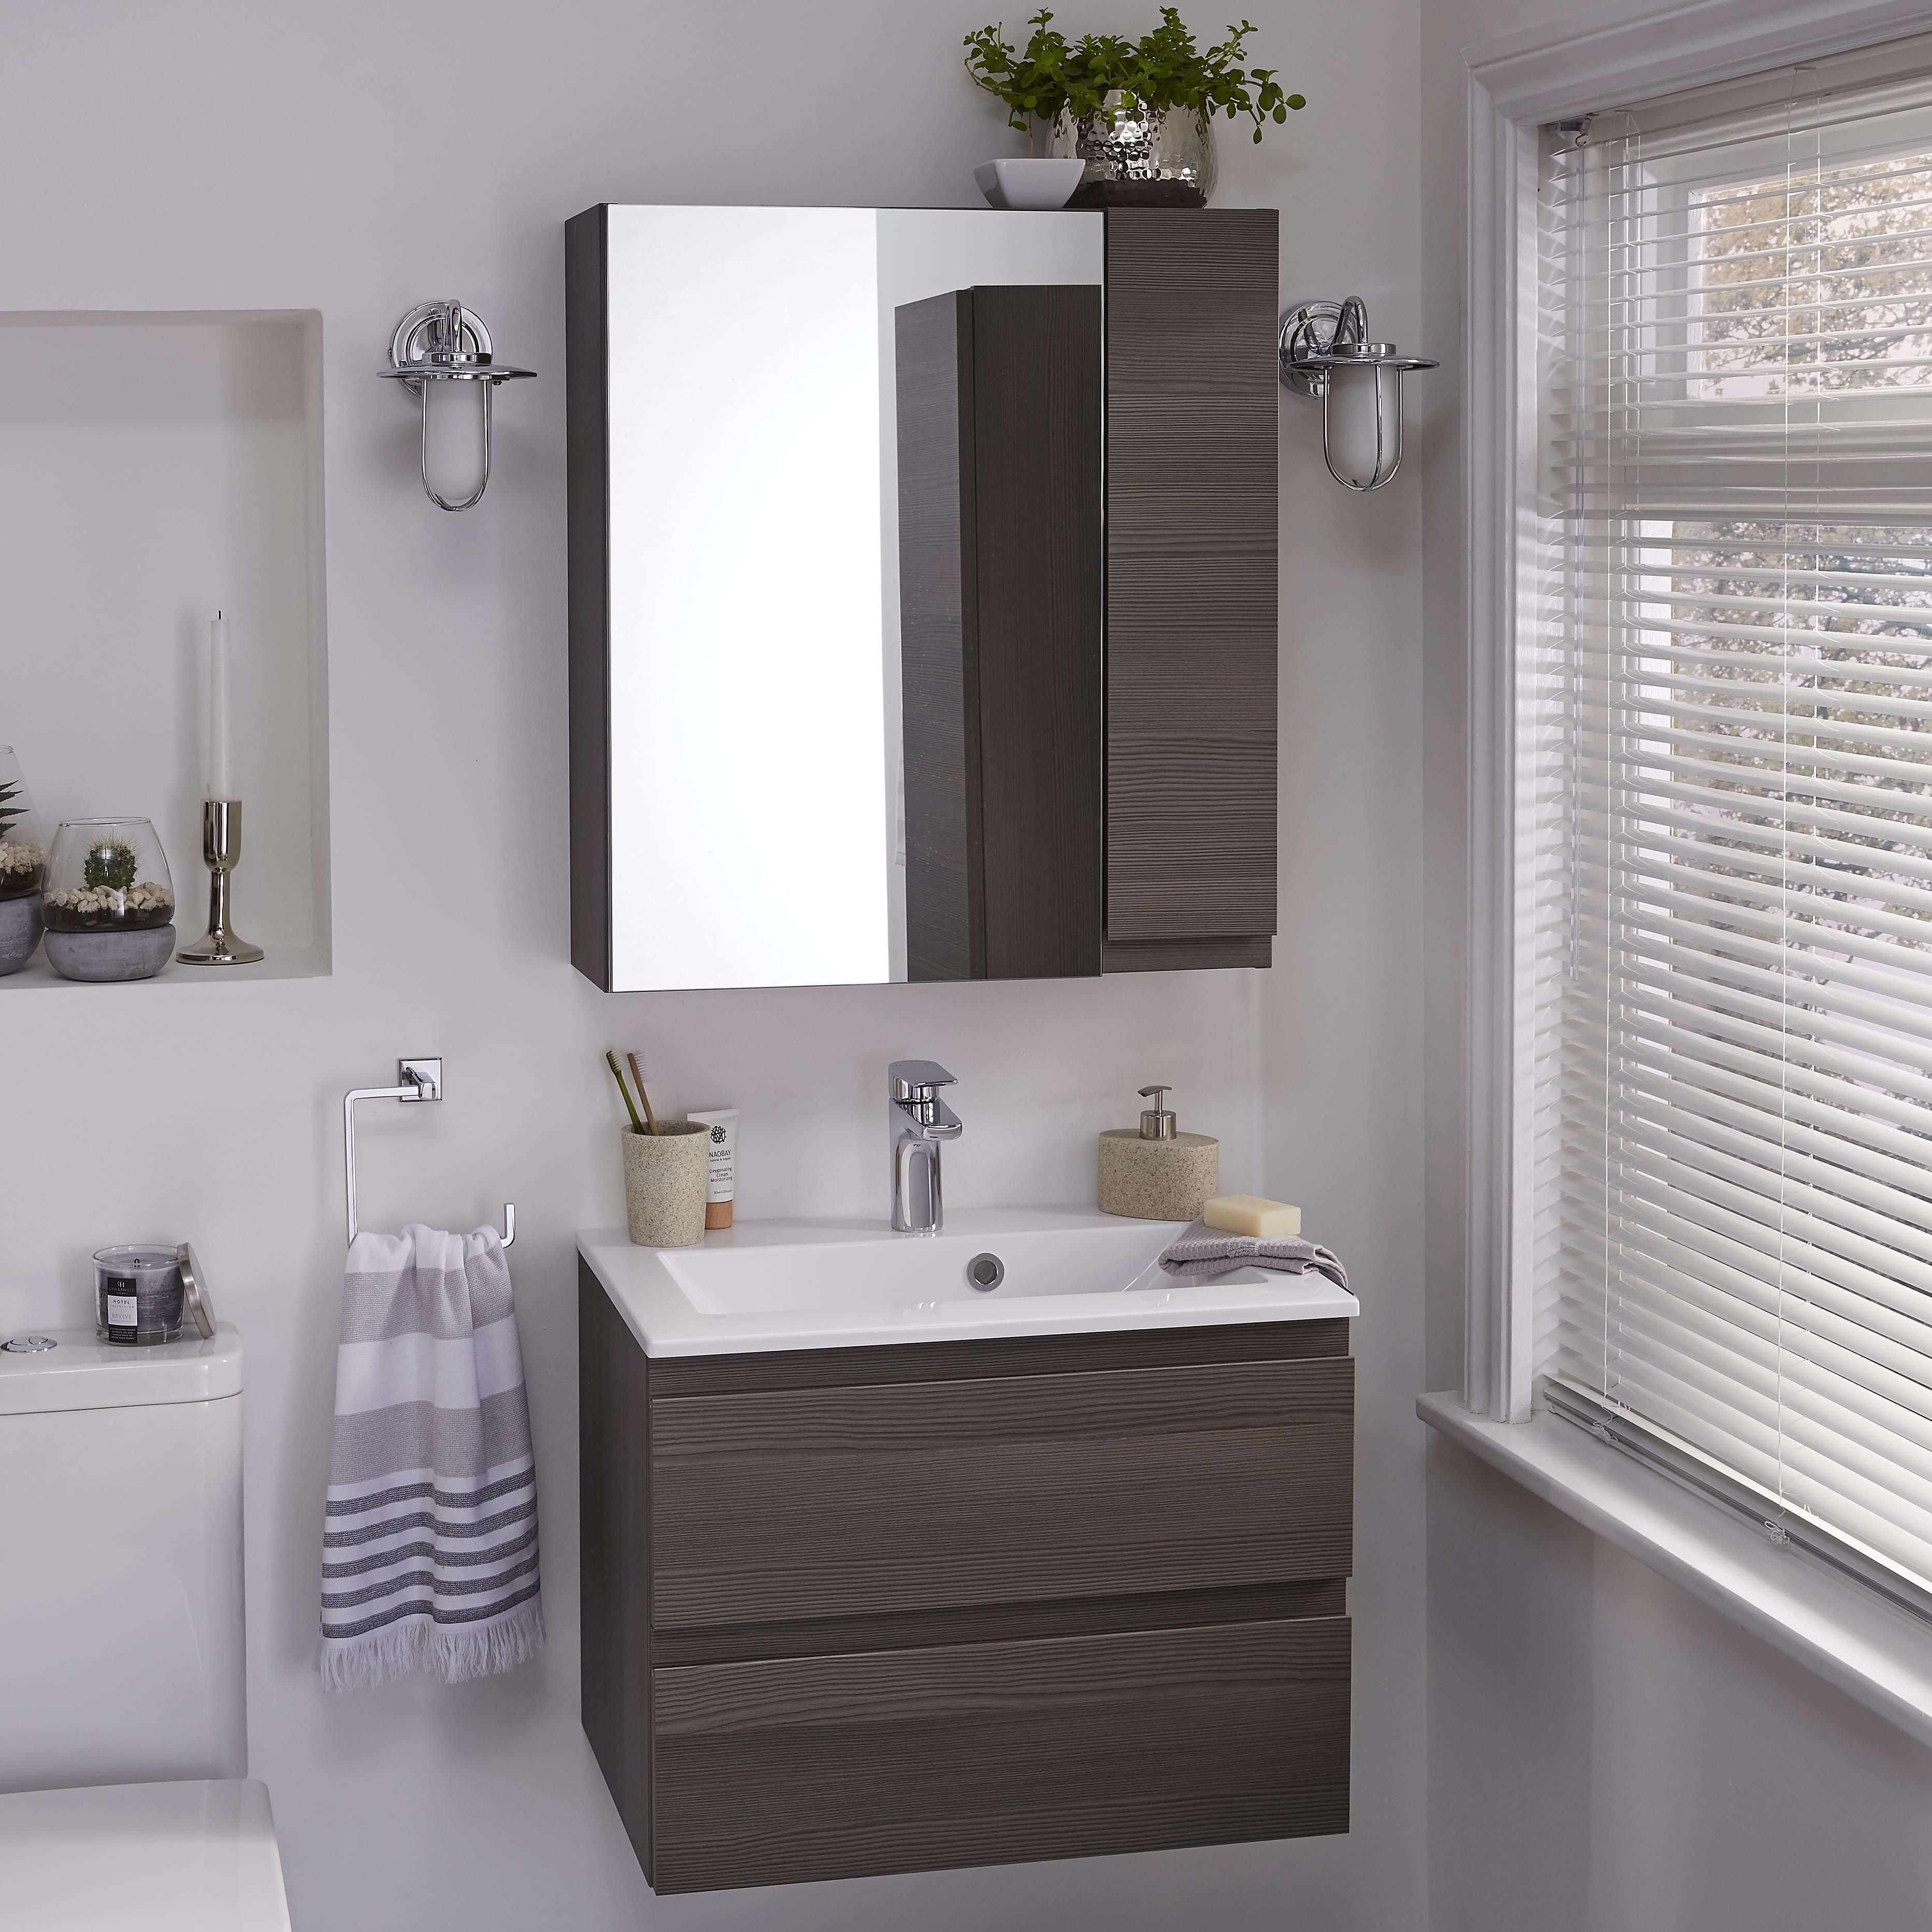 15+ Clever Small Bathroom Cabinet Ideas | Architecture Ideas